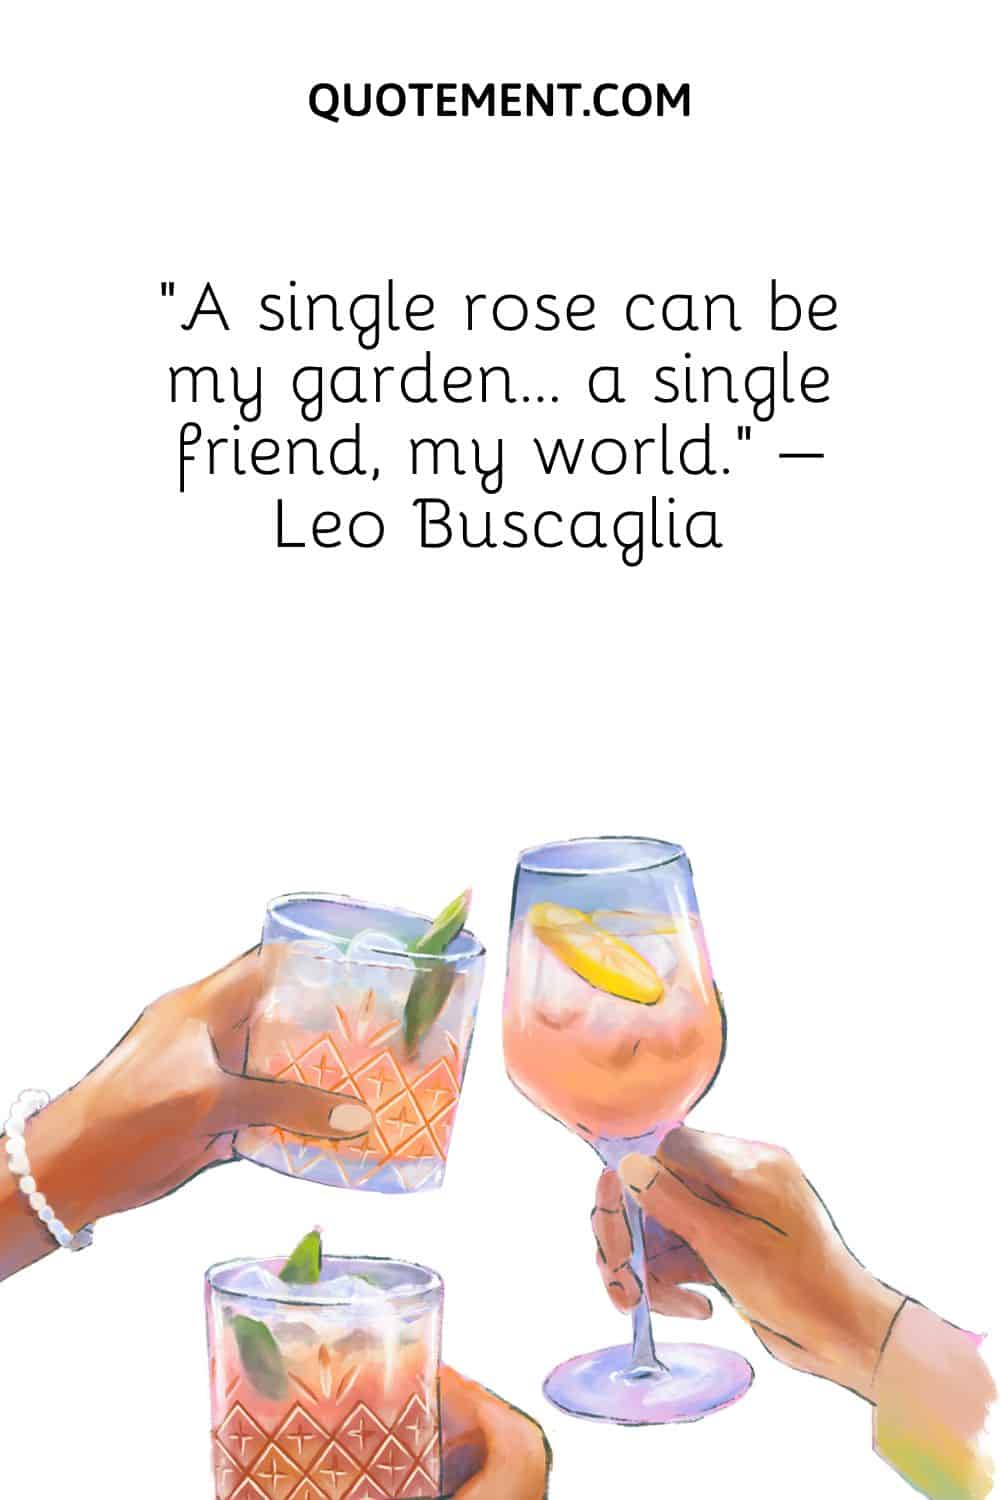 “A single rose can be my garden… a single friend, my world.” – Leo Buscaglia